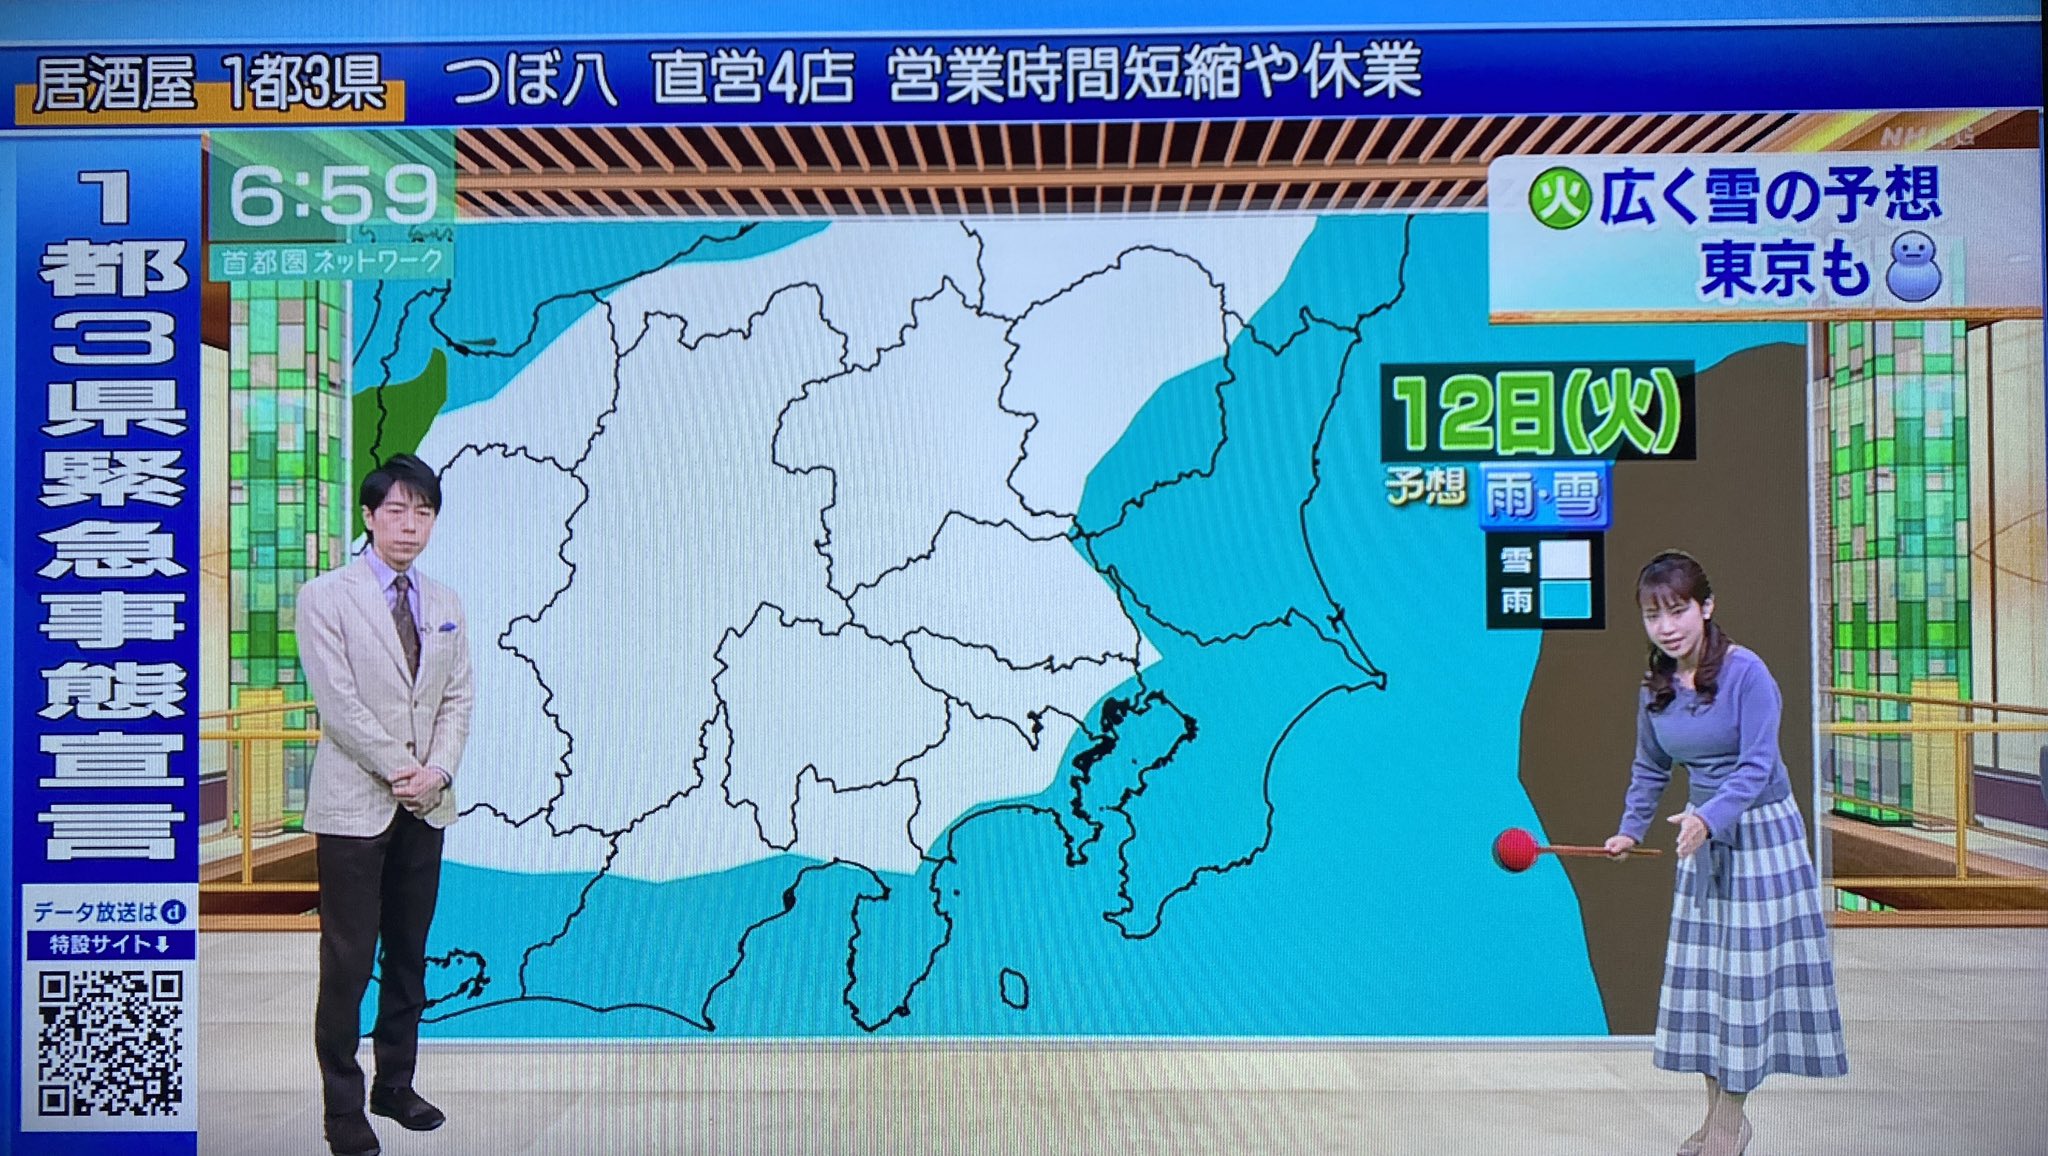 تويتر くまはうす على تويتر 来週12日 火曜日 東京 雪マーク出ました 天気予報 雪 T Co Tao7smc0ev